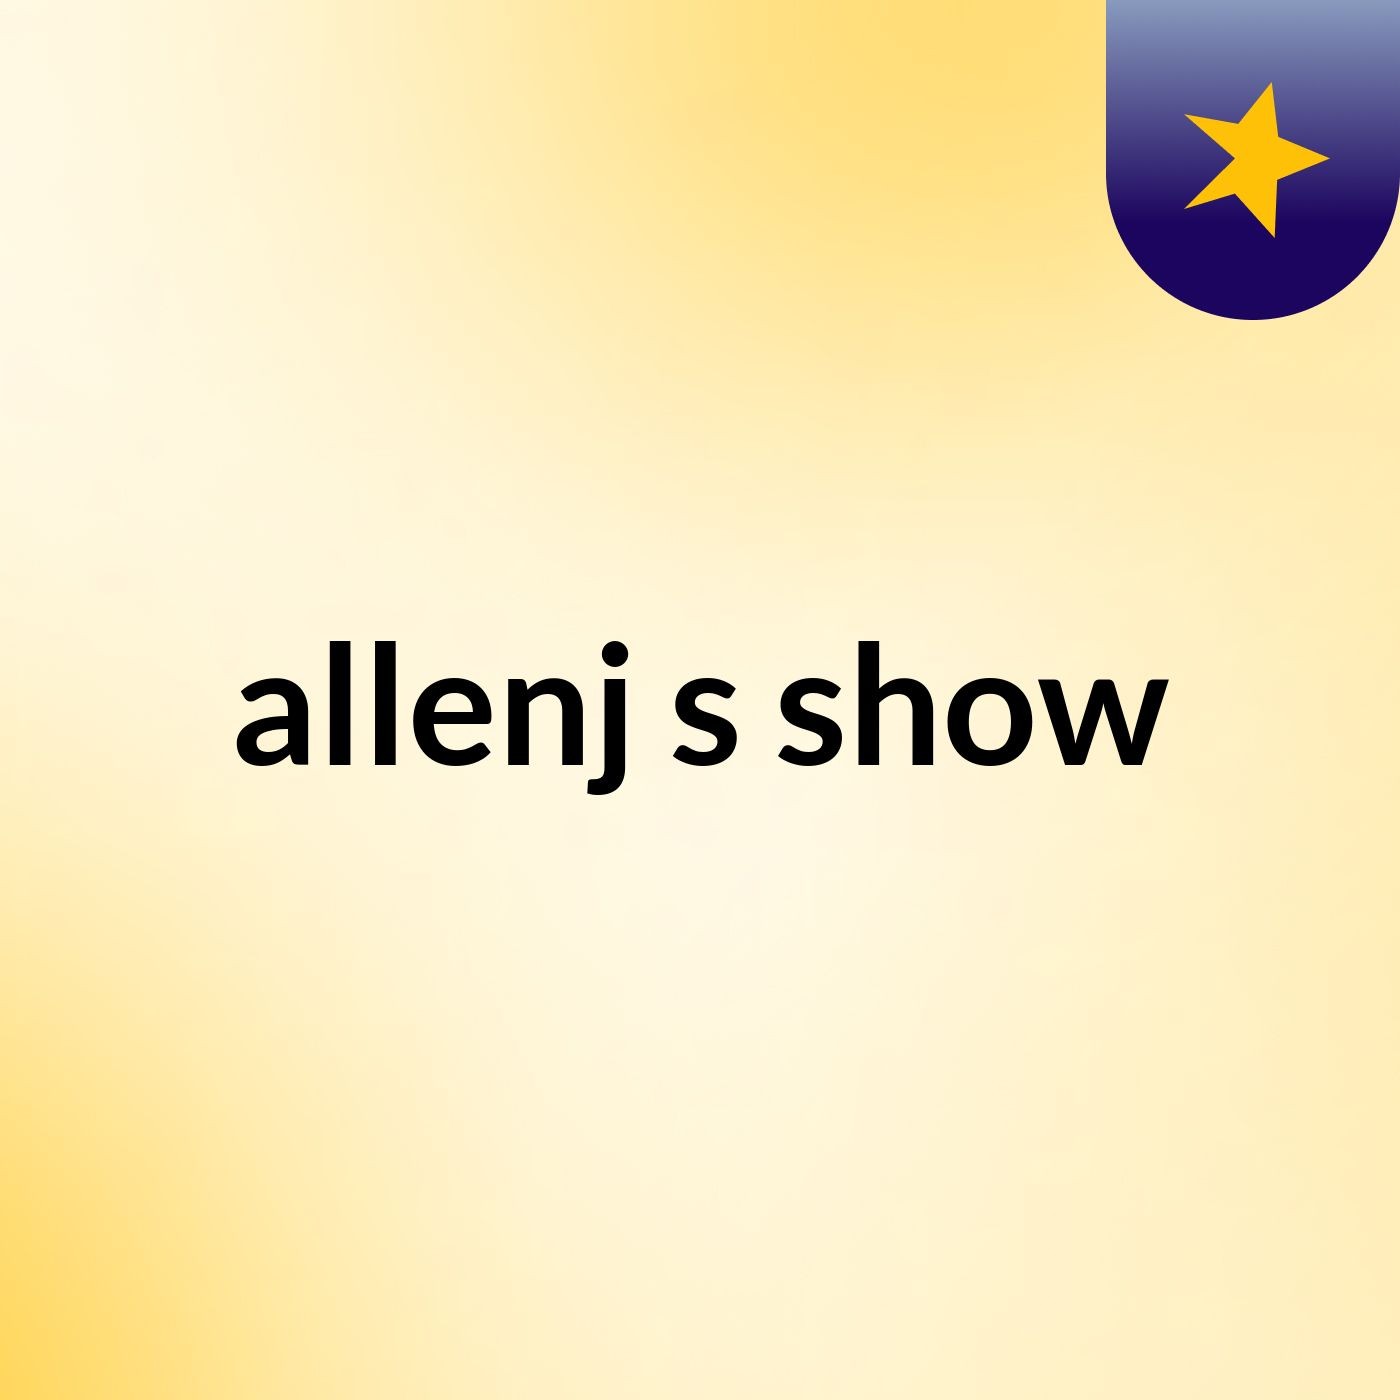 allenj's show